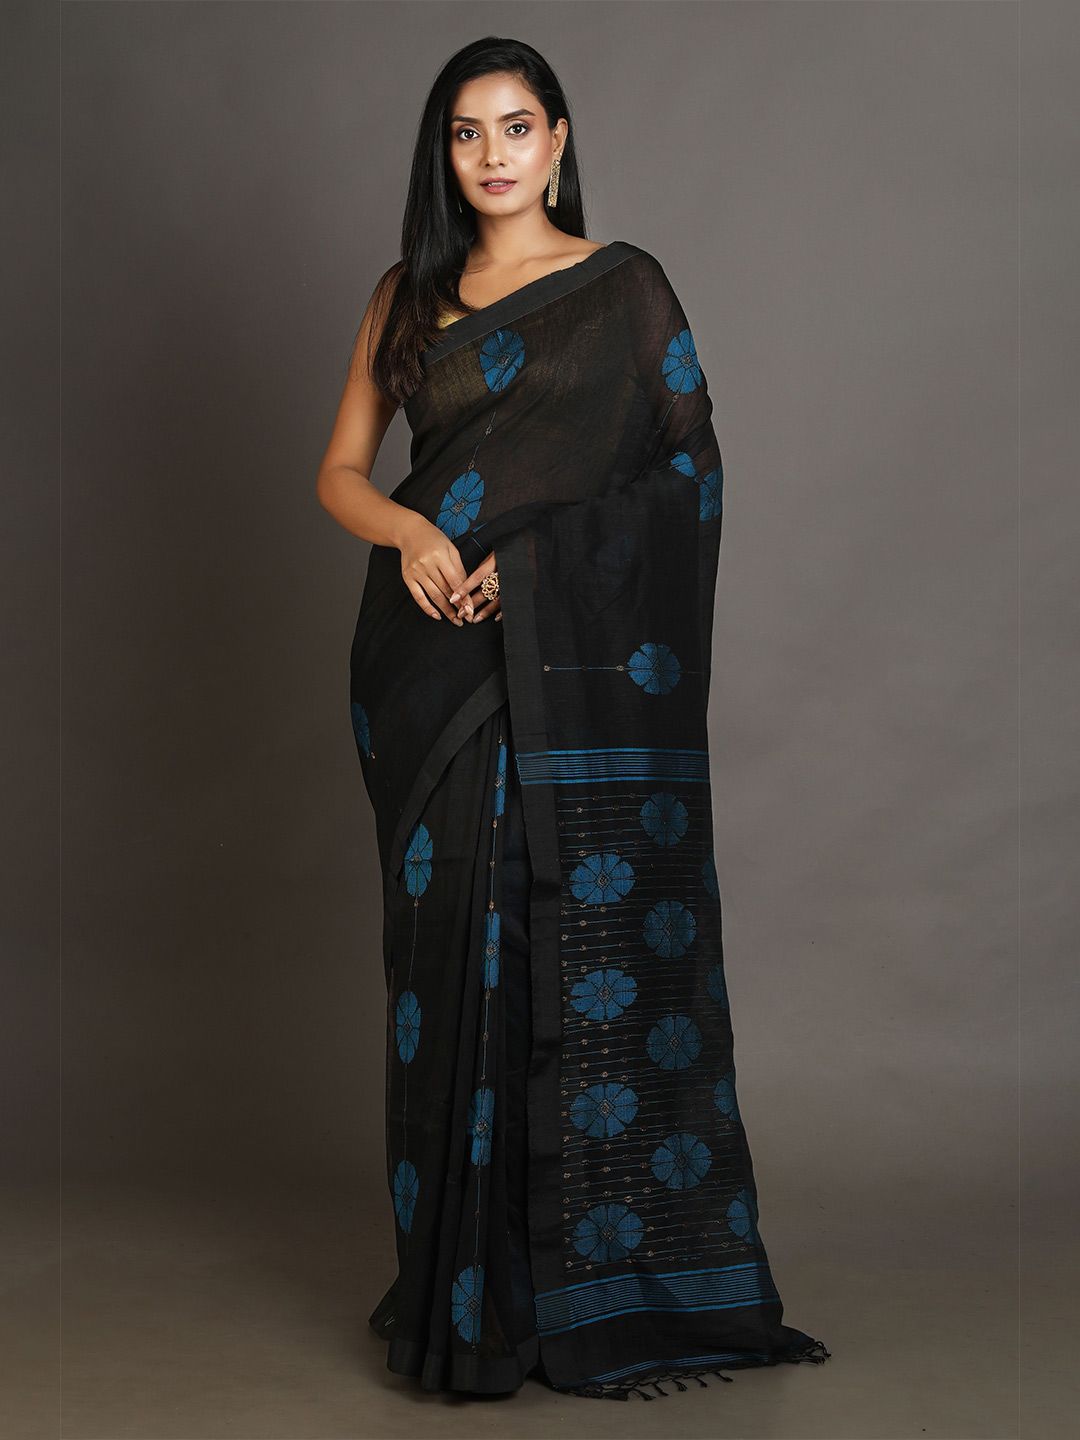 Arhi Black & Blue Floral Handwoven Pure Linen Saree Price in India